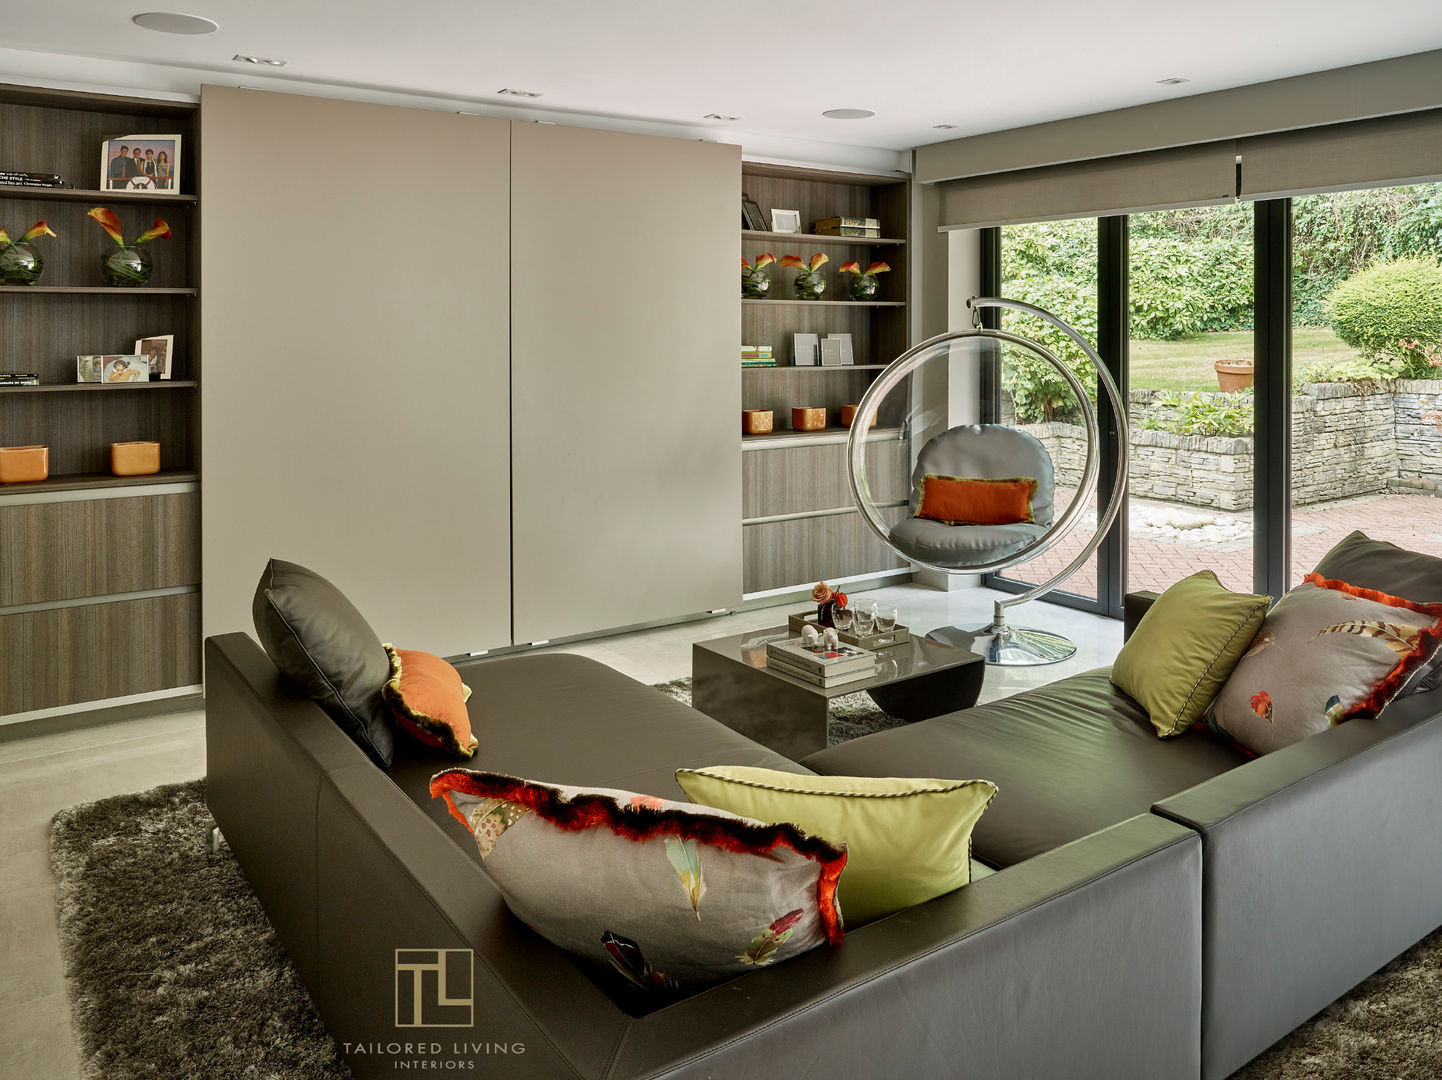 Versatile design Tailored Living Interiors Kitchen Kitchen designer,interior designer,contemporary kitchen,bespoke design